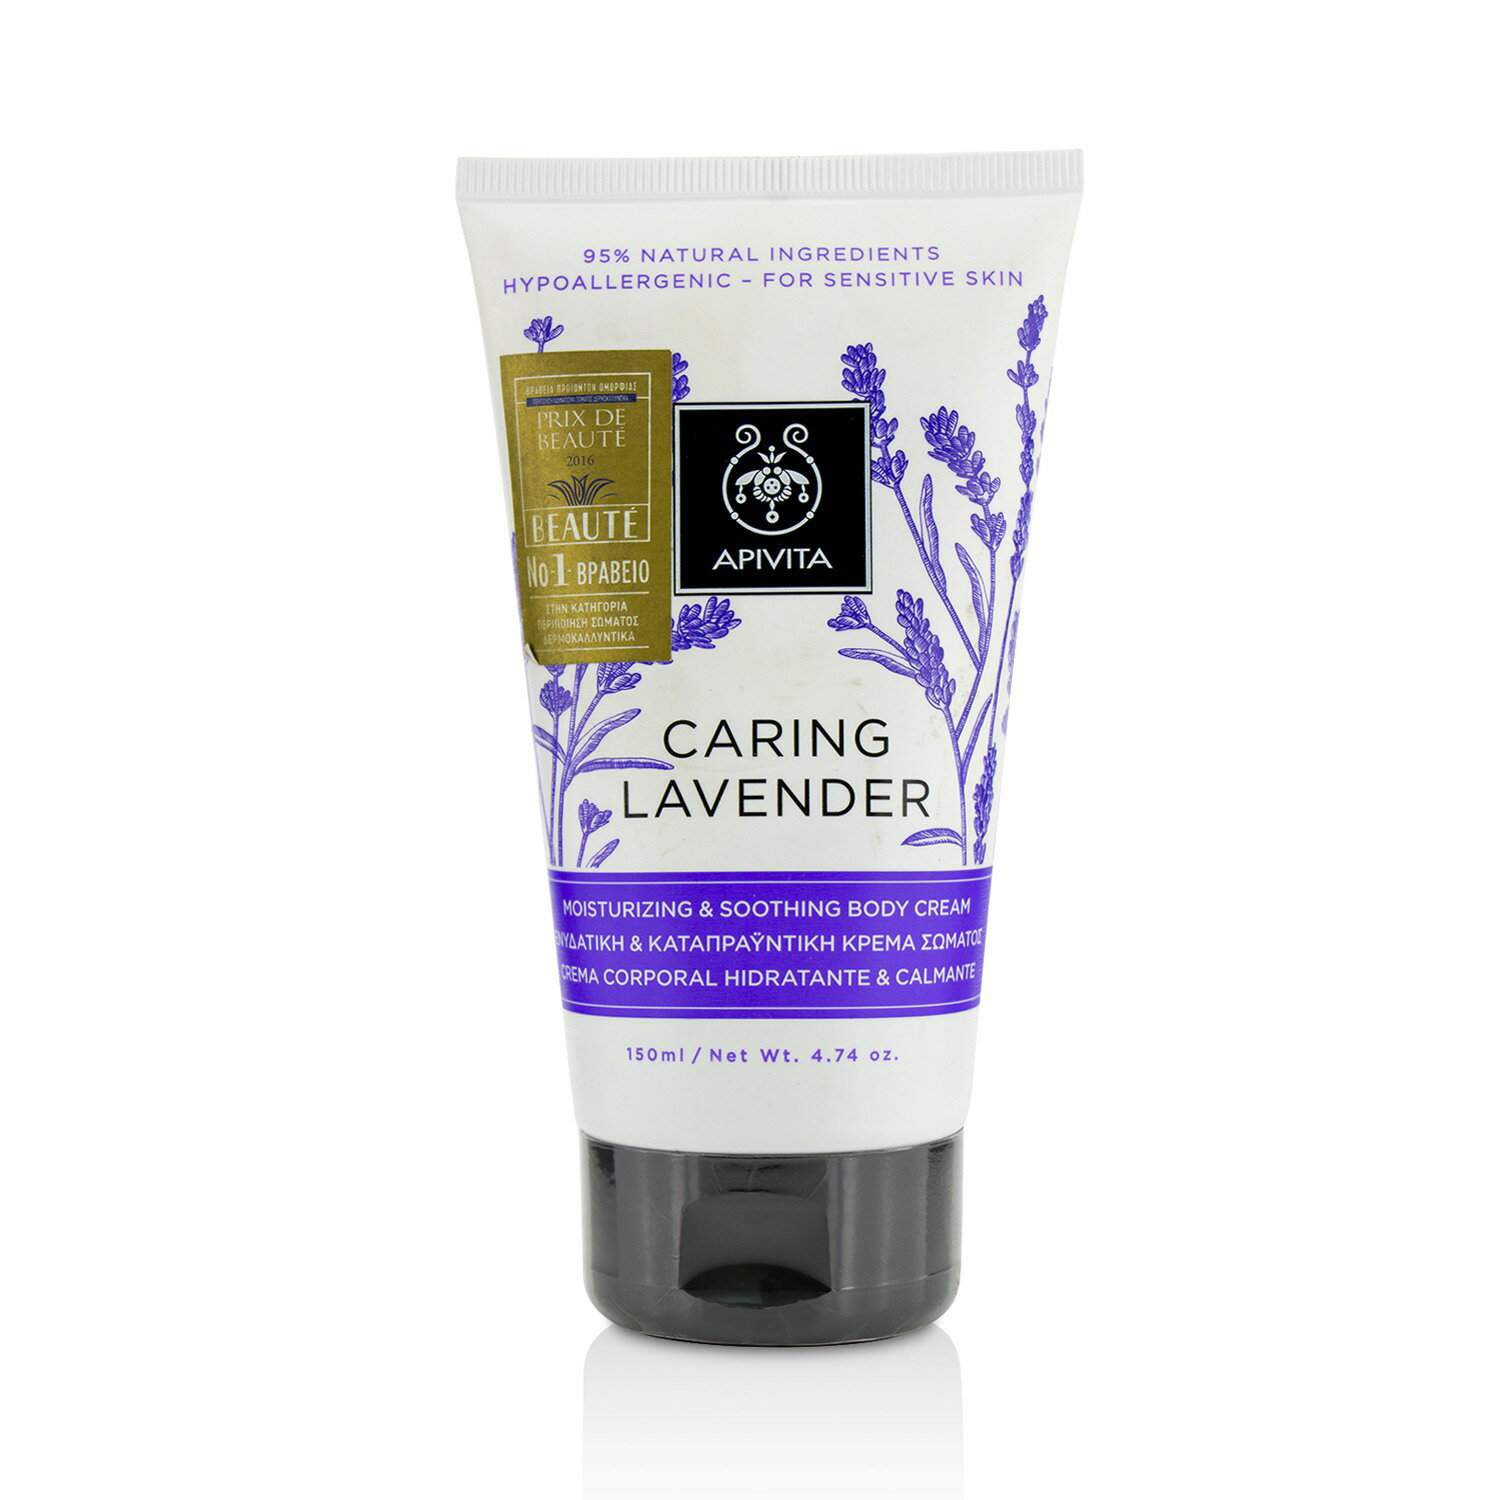 艾蜜塔 Apivita - 薰衣草保濕身體乳-敏感肌膚 Caring Lavender Moisturizing & Soothing Body Cream